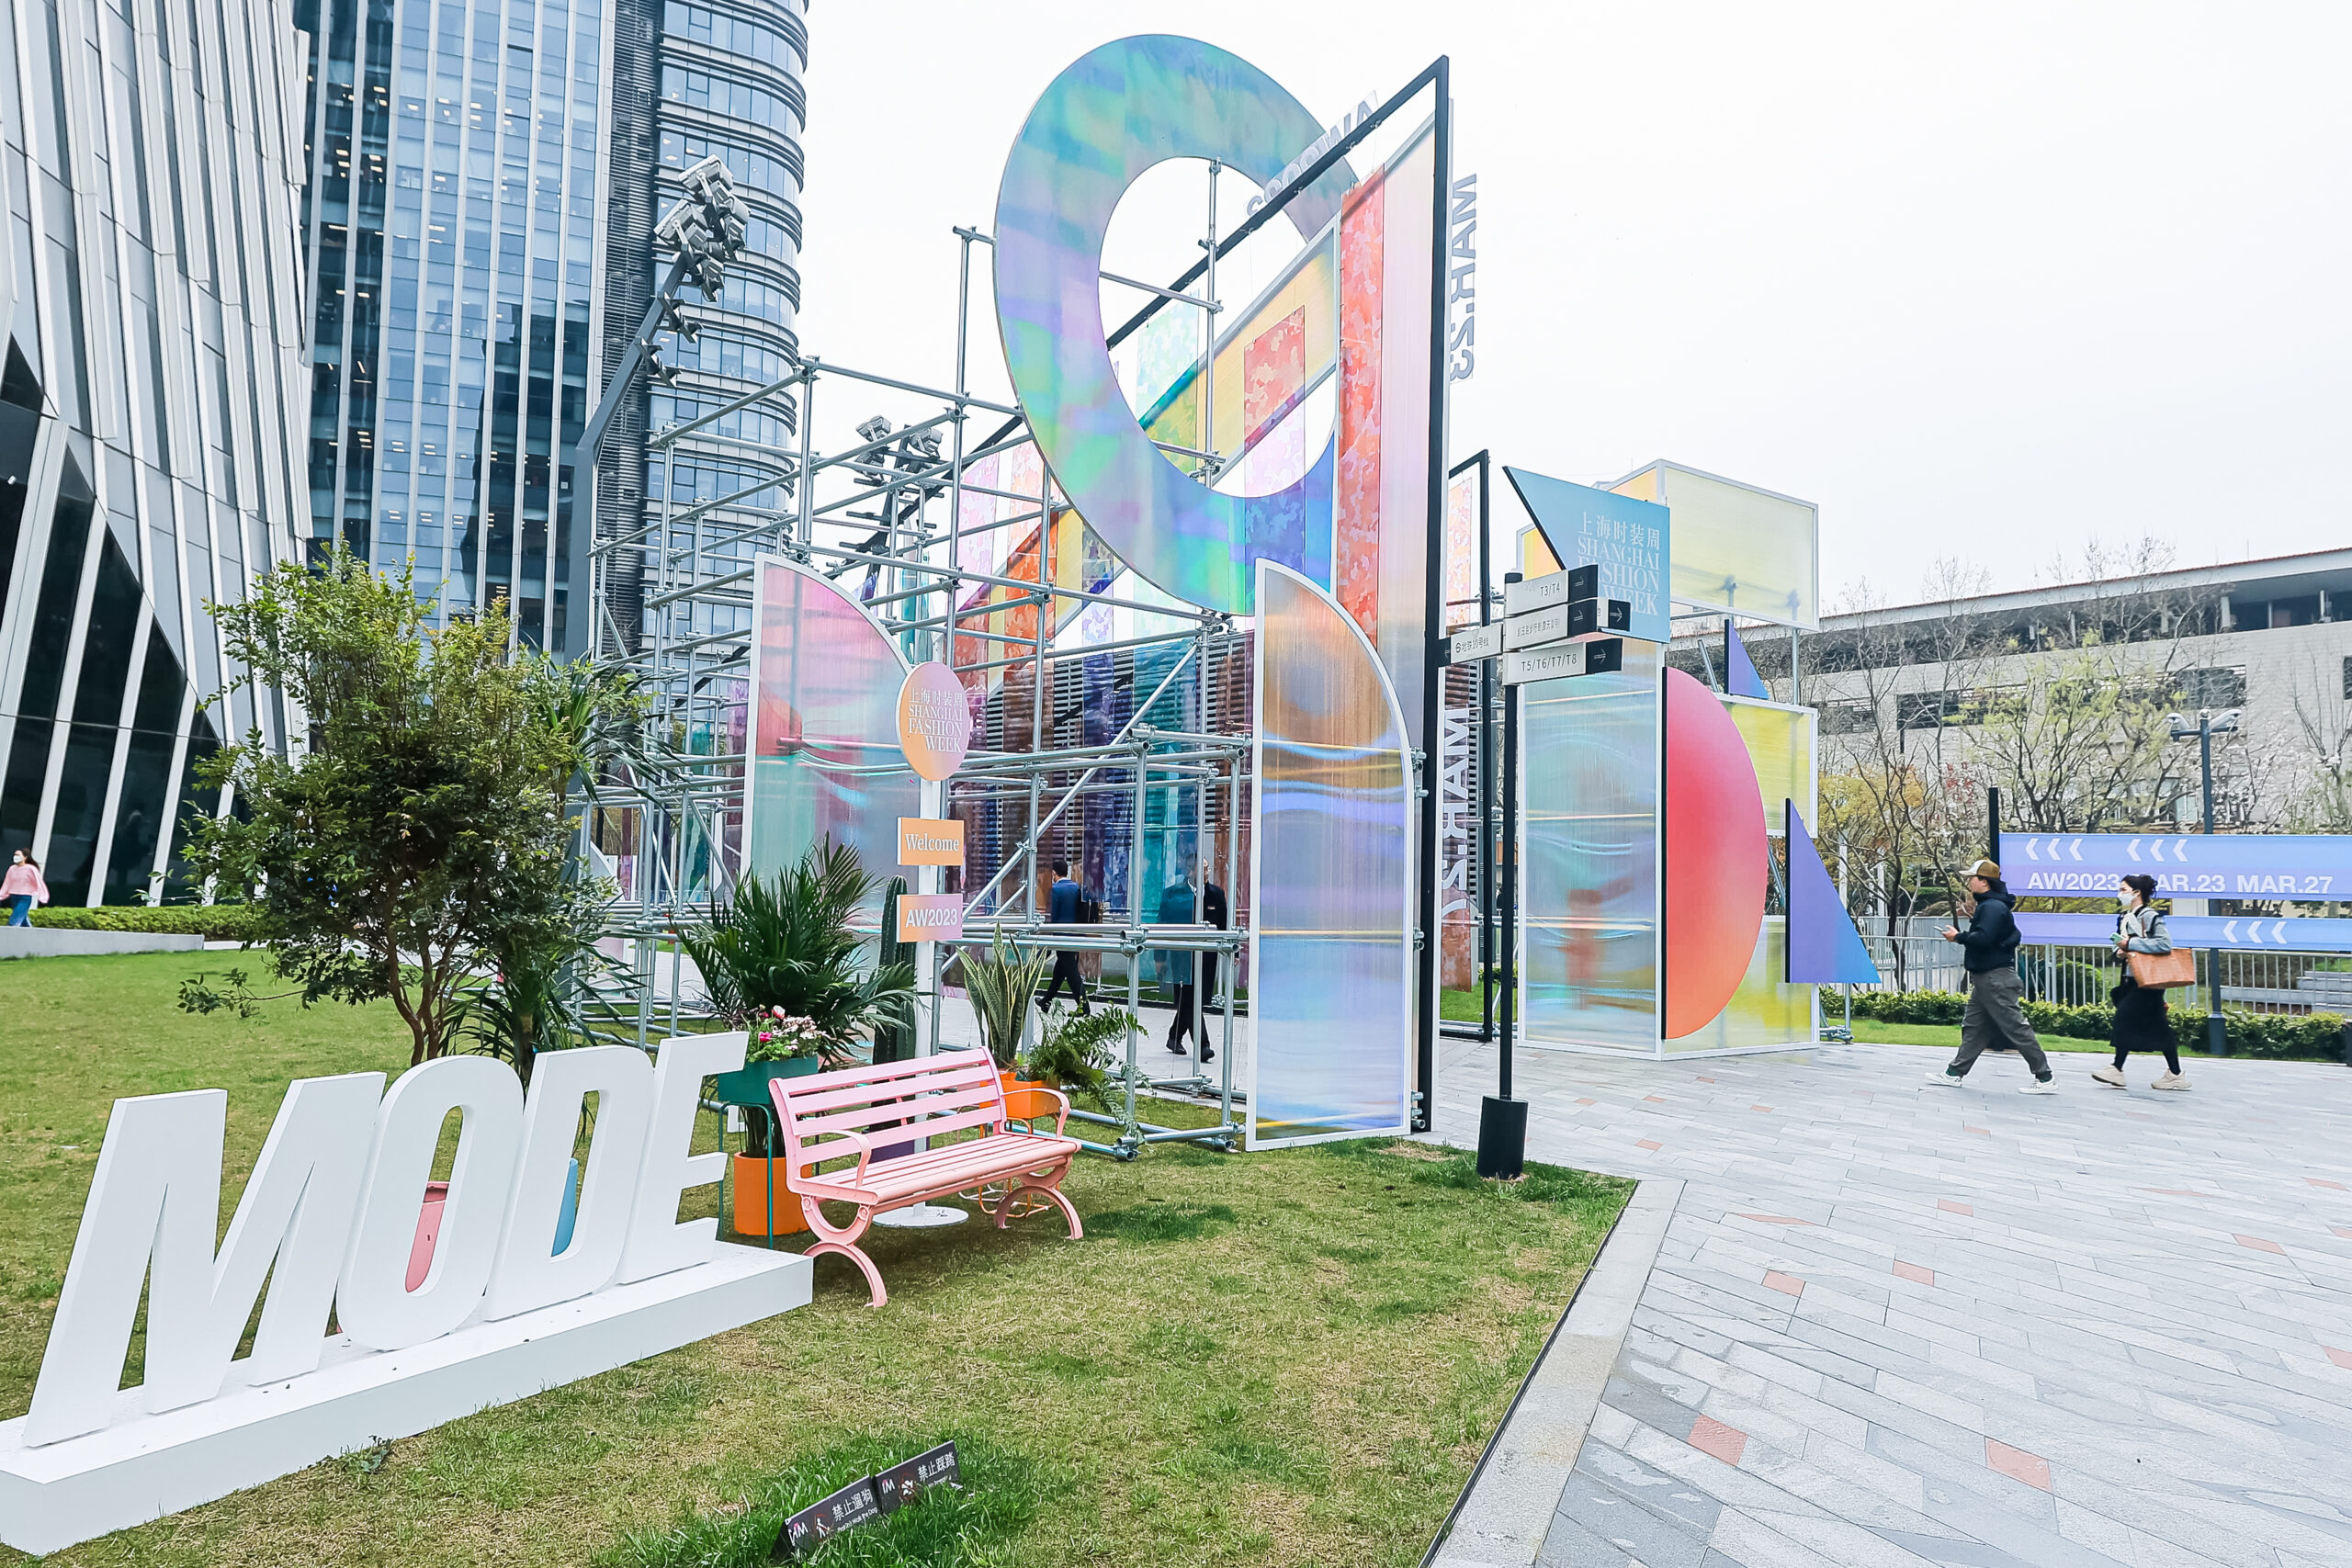 MODE Shanghai Exhibition Showcases the Revival of Energy at Shanghai Fashion Week